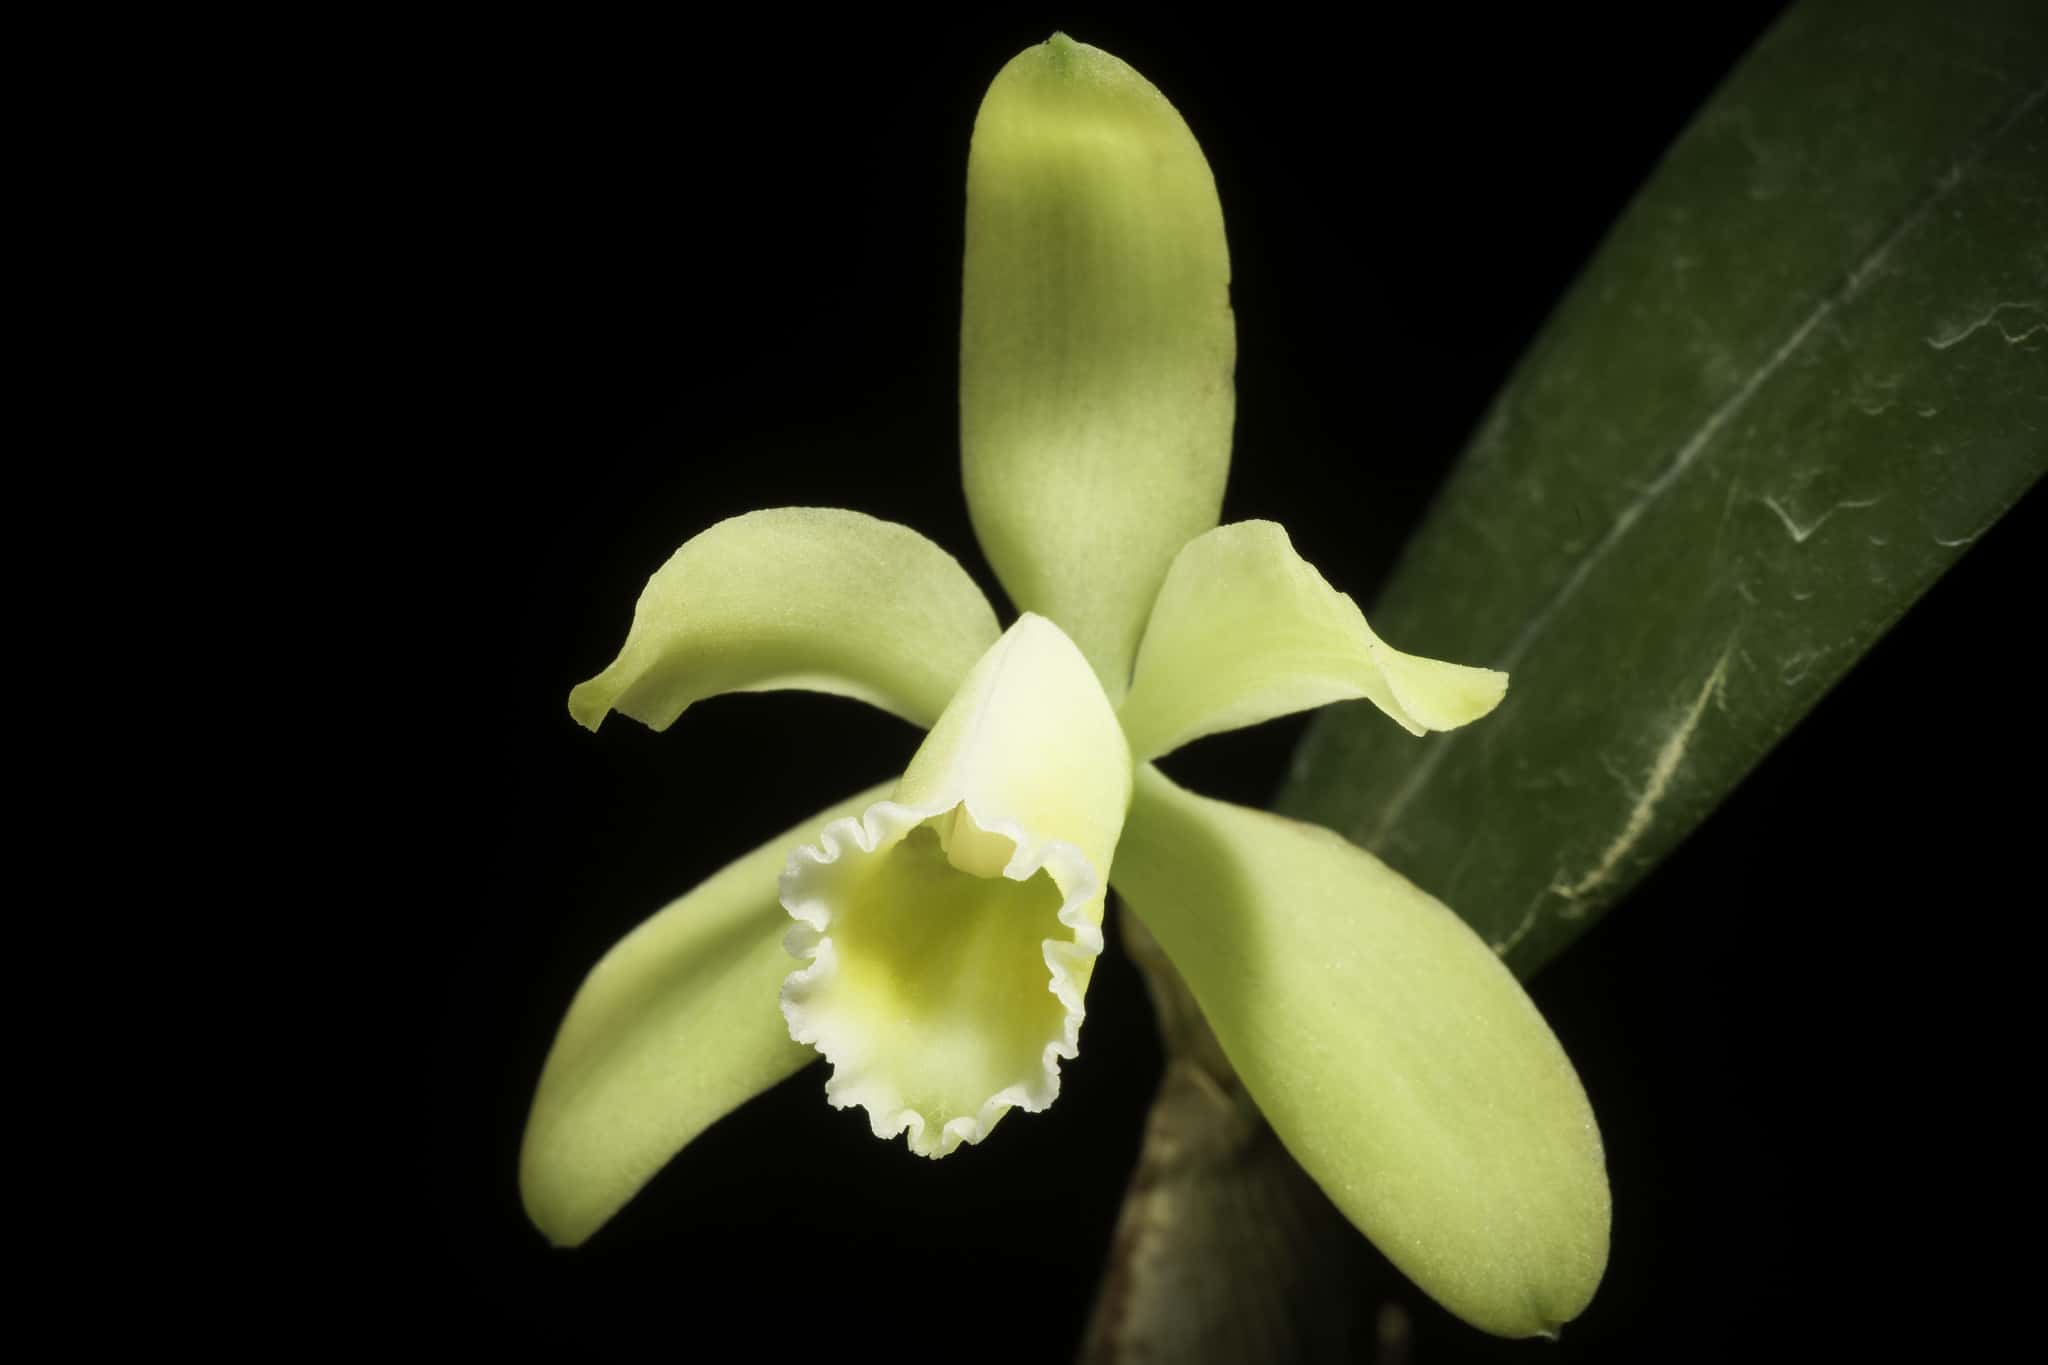 Cattleya luteola yellow orchid